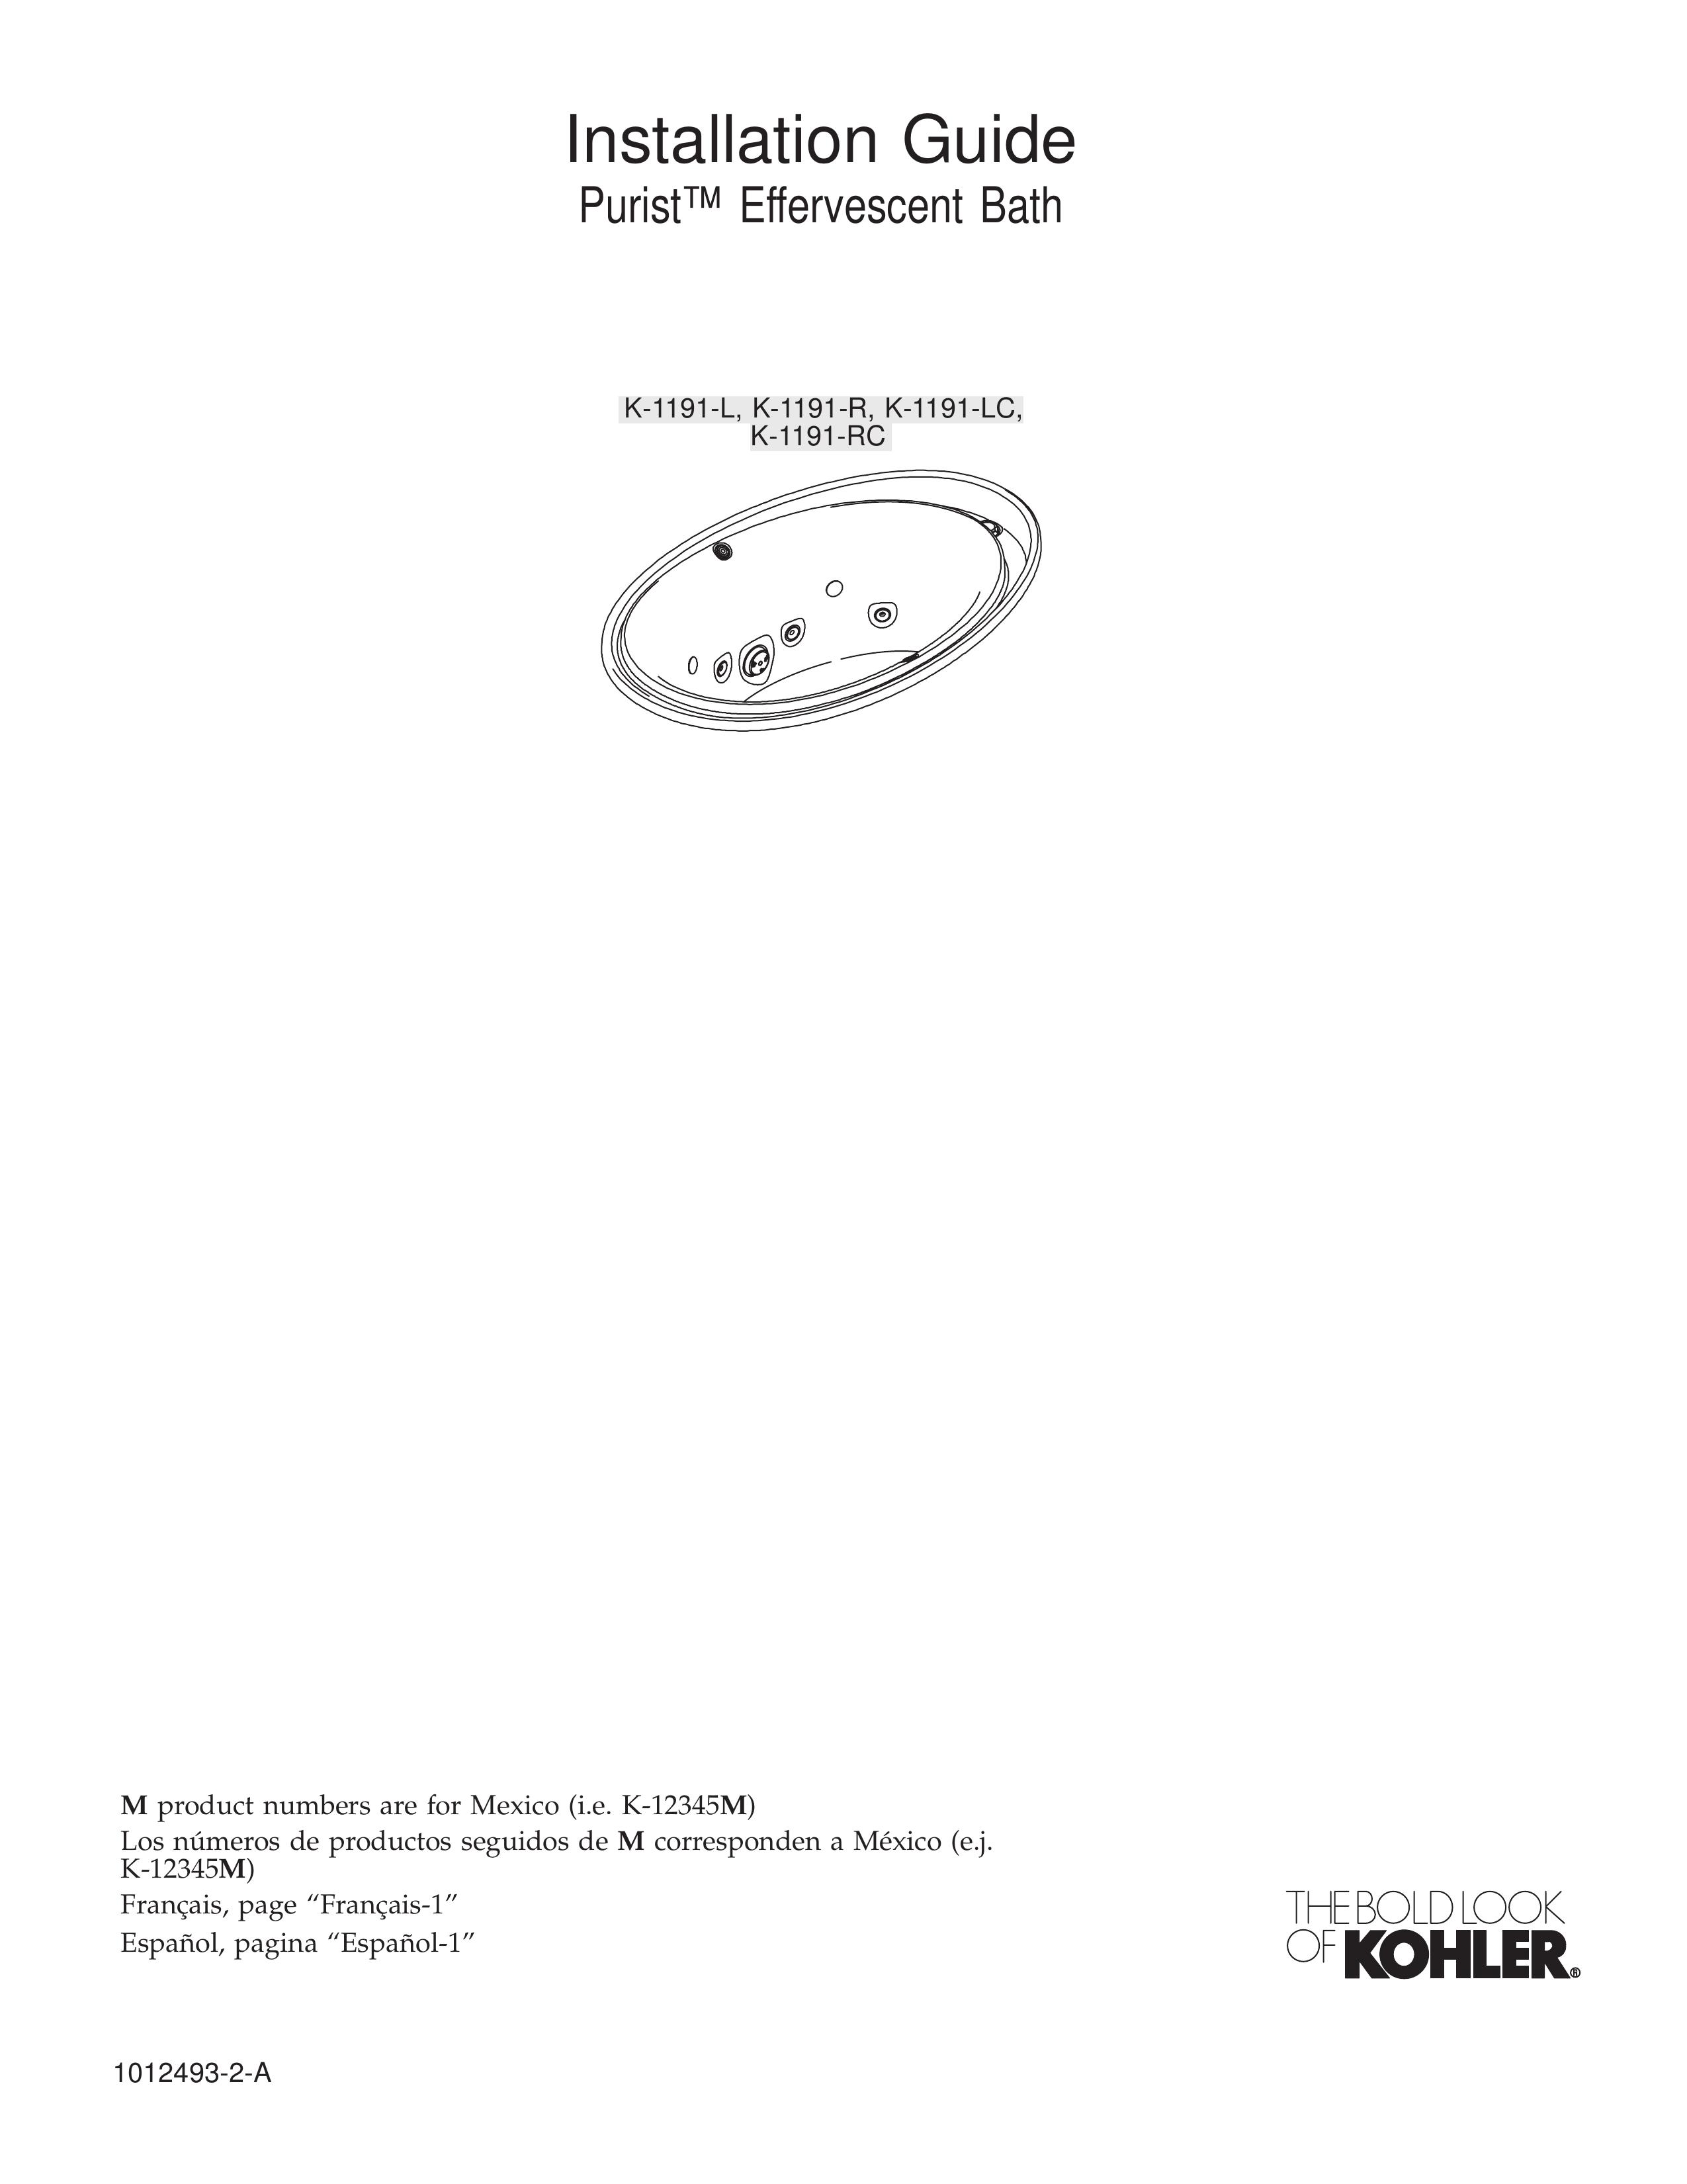 Kohler K1191-R Bathroom Aids User Manual